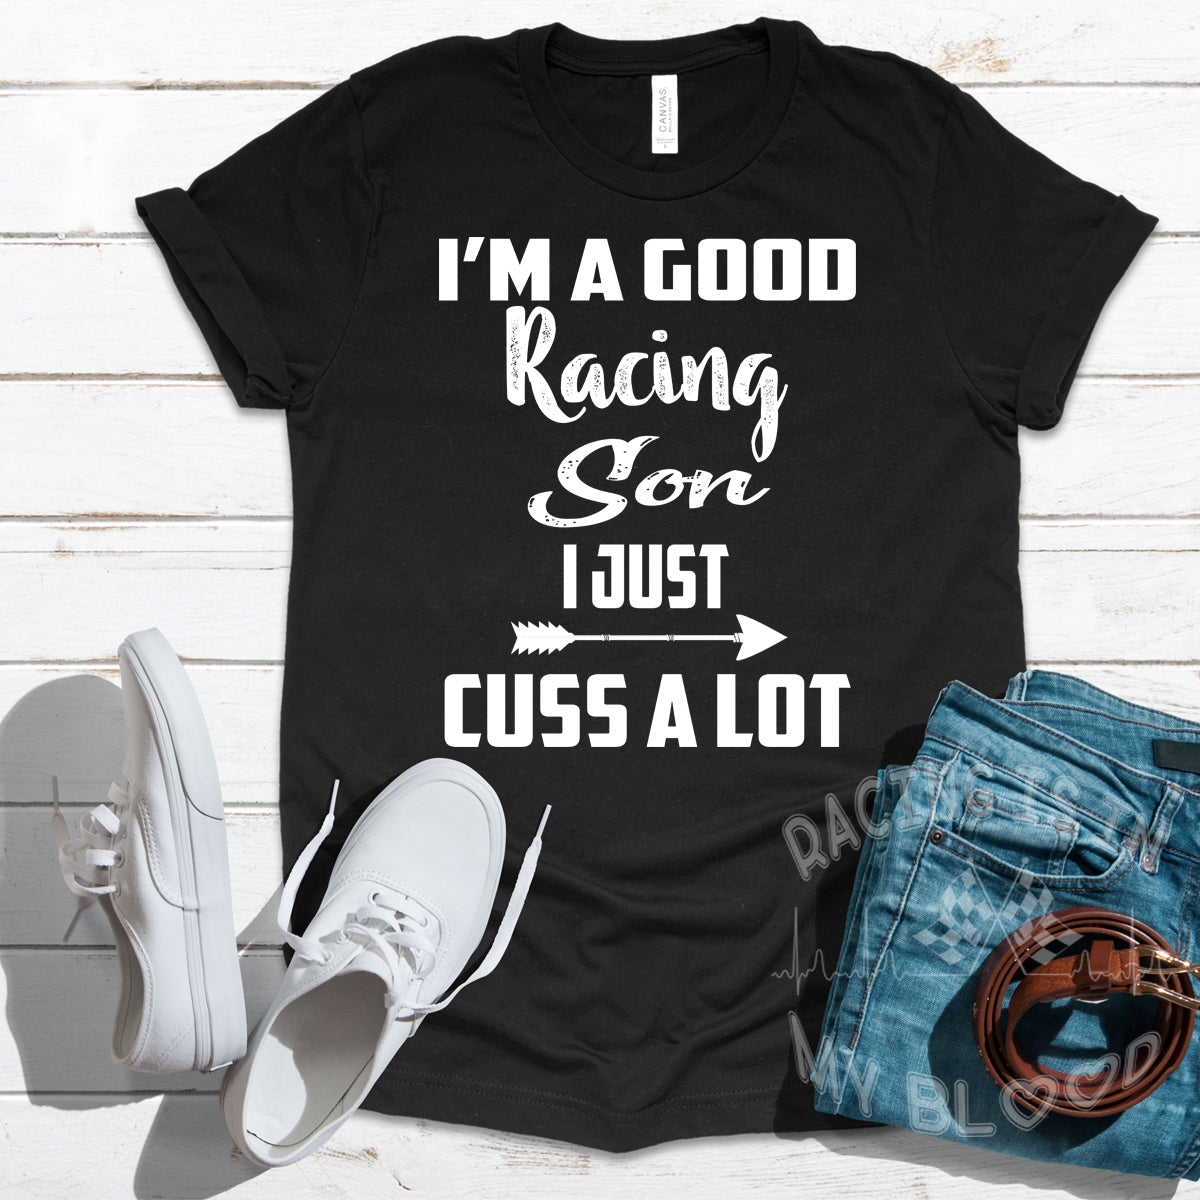 I'm a good Racing Son I Just Cuss A Lot T-Shirts!